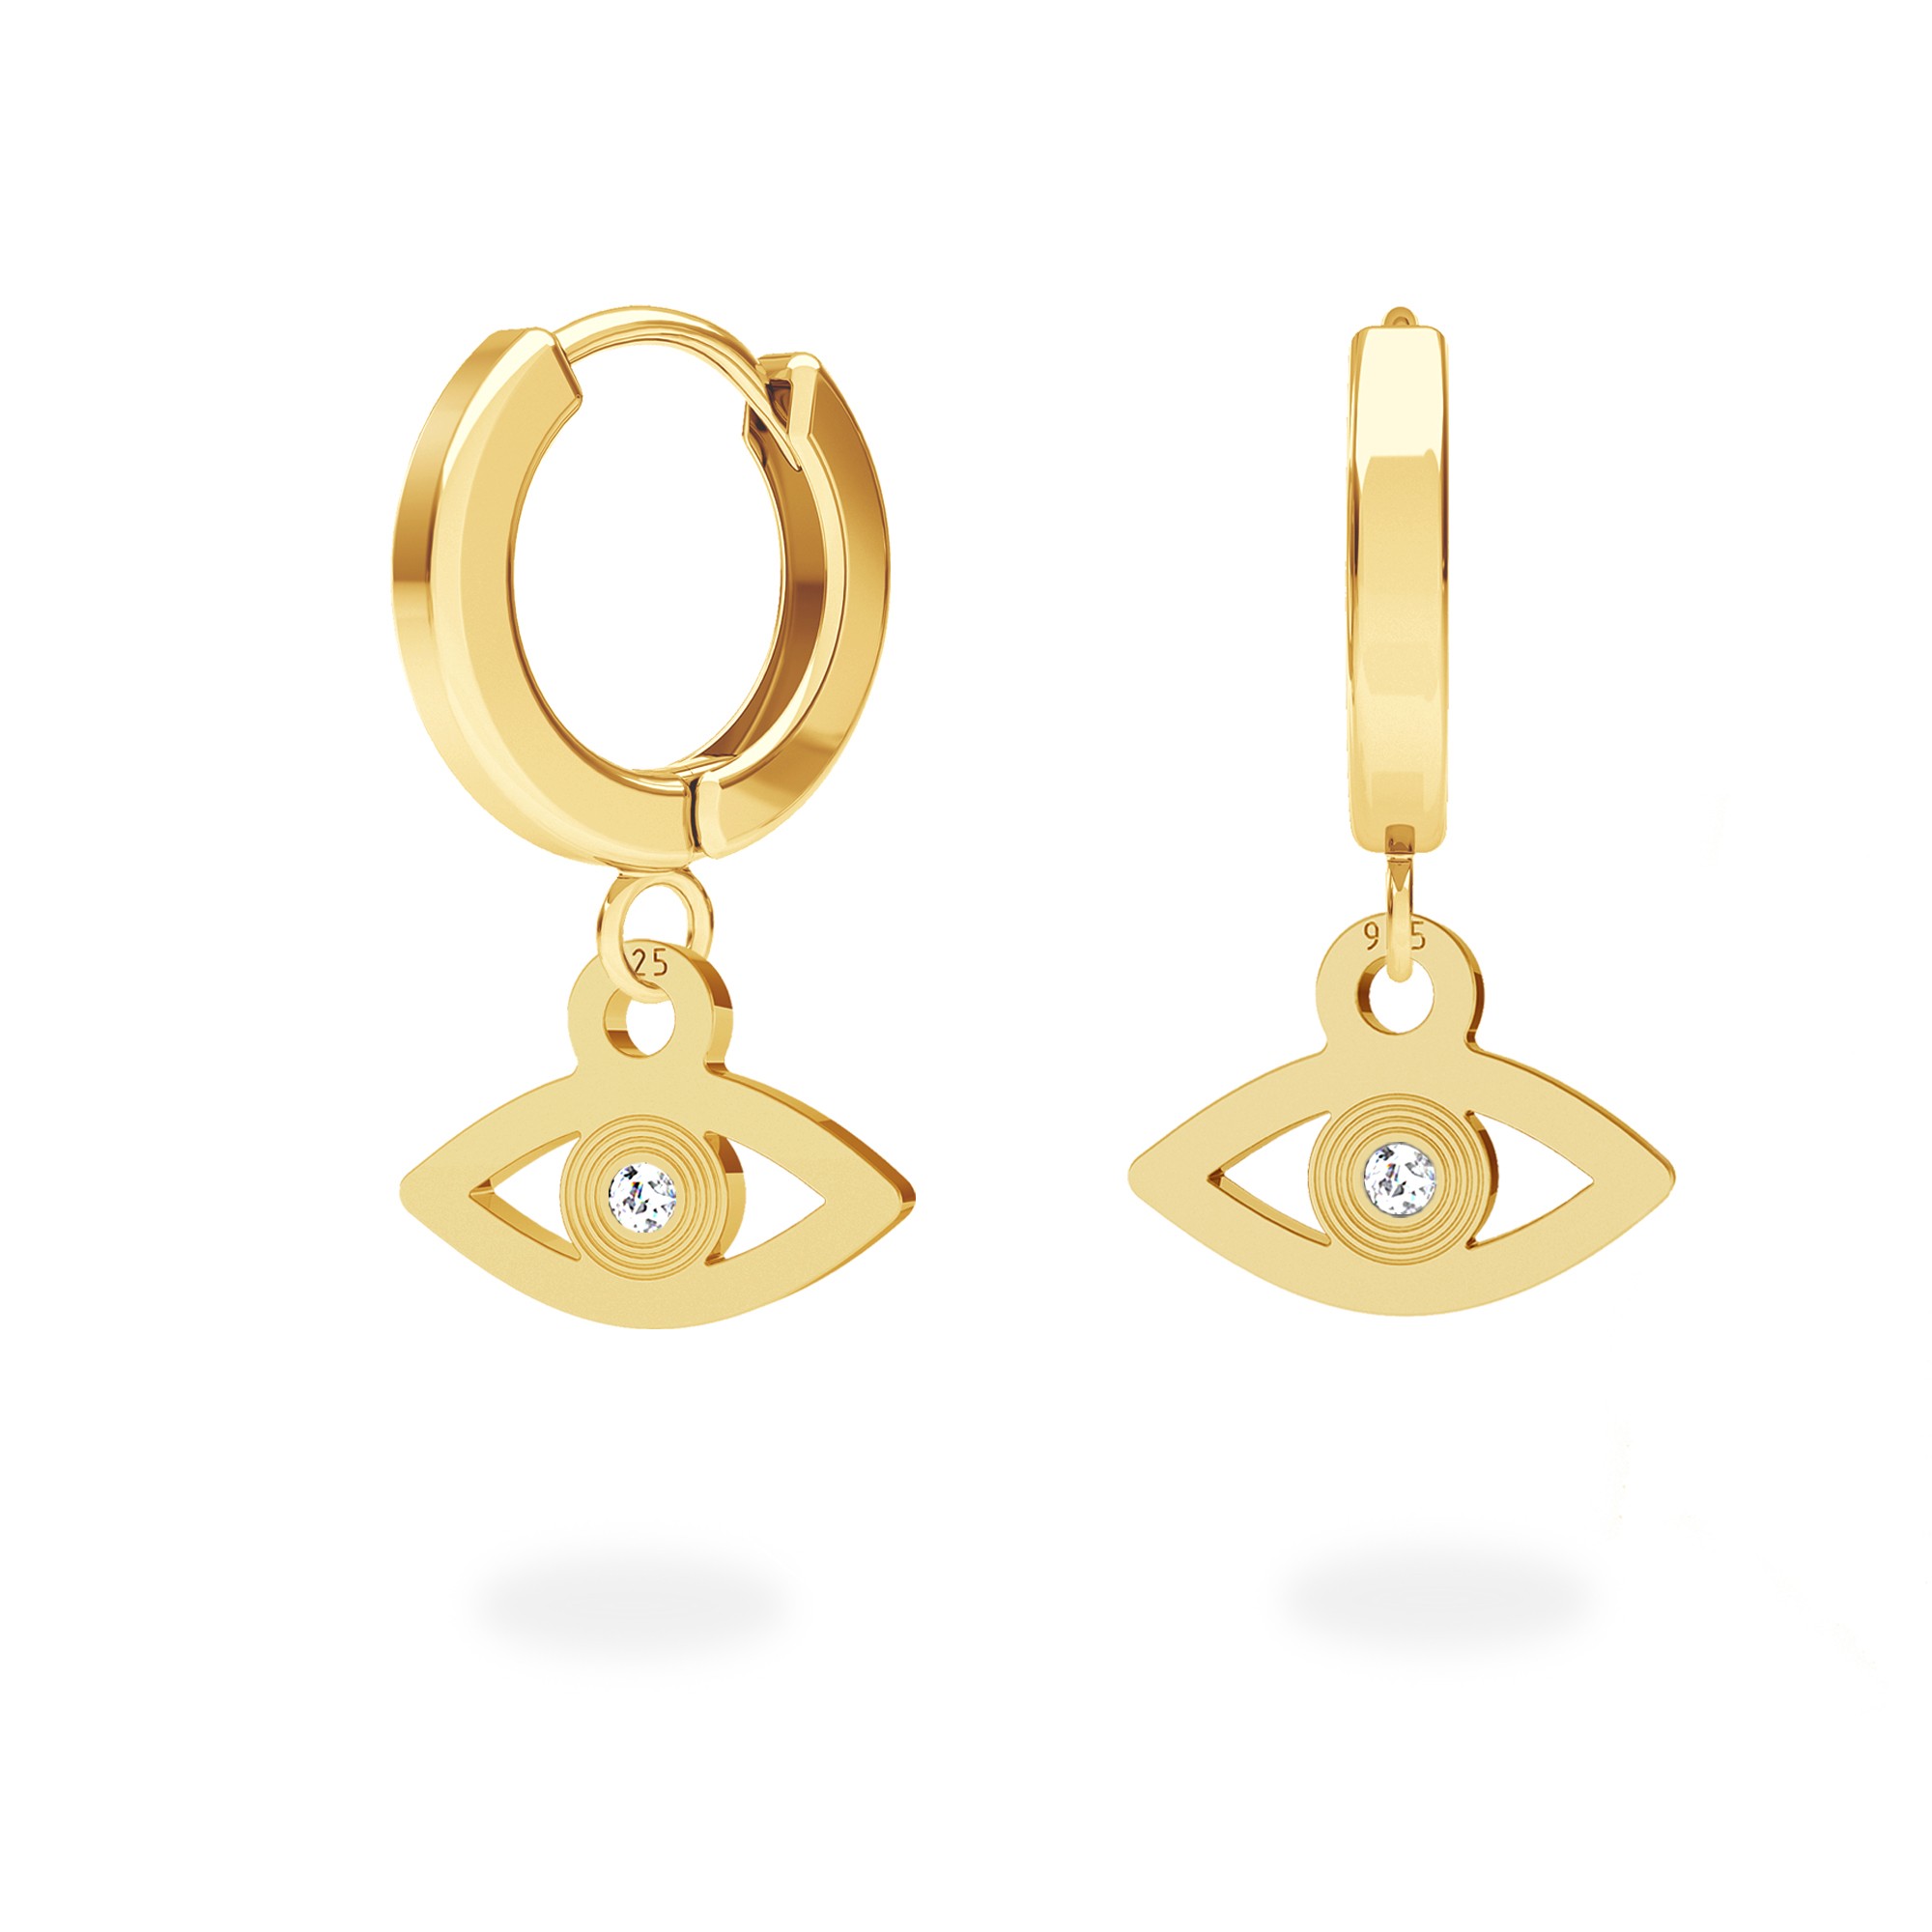 Eye earrings with Swarovski Crystals sterling silver 925